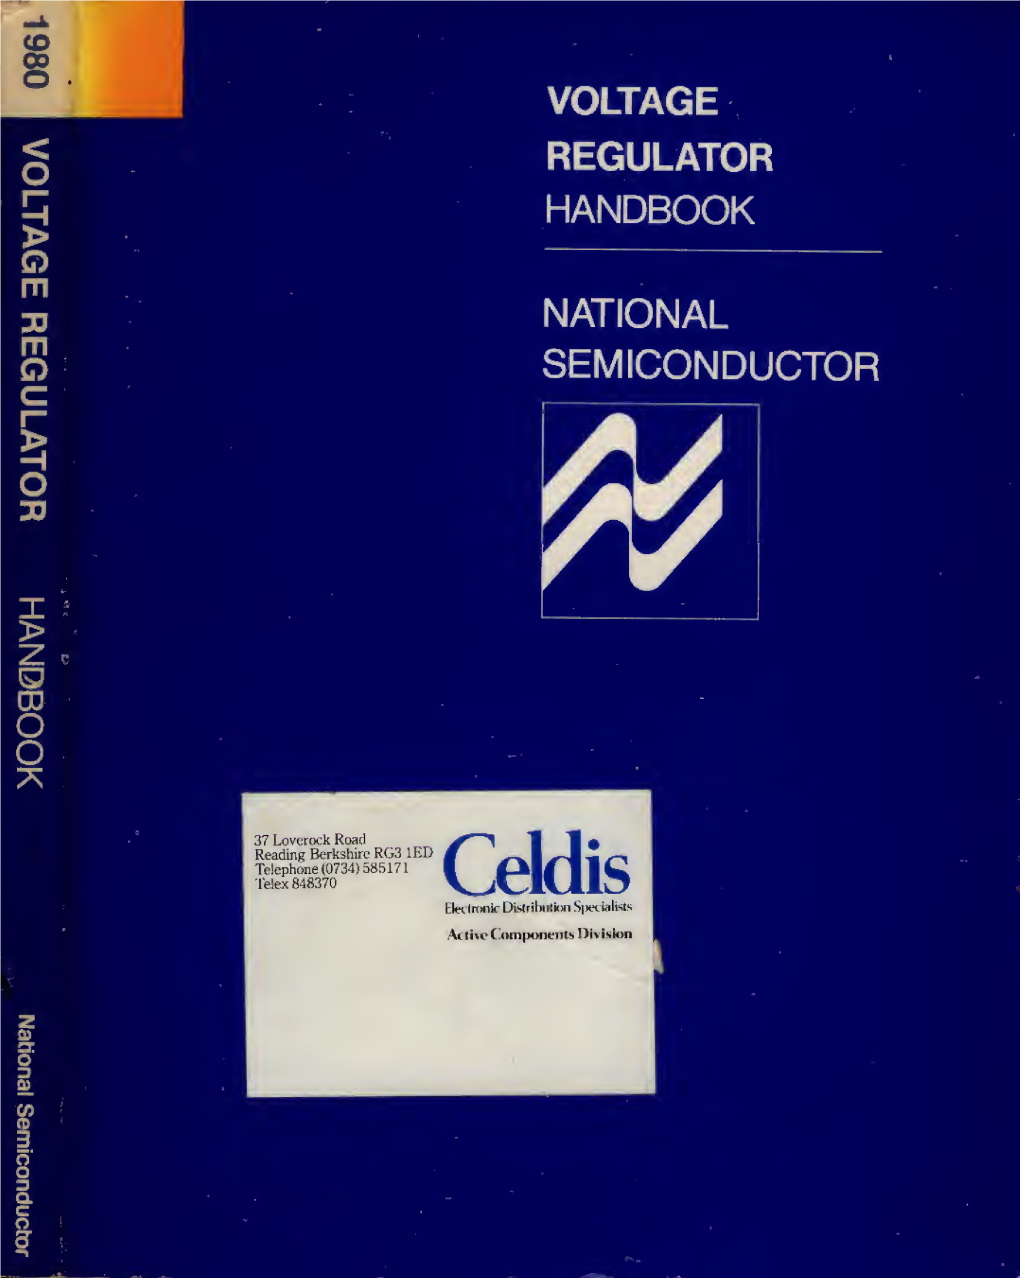 National Semiconductor Voltage Regulator Handbook 1980